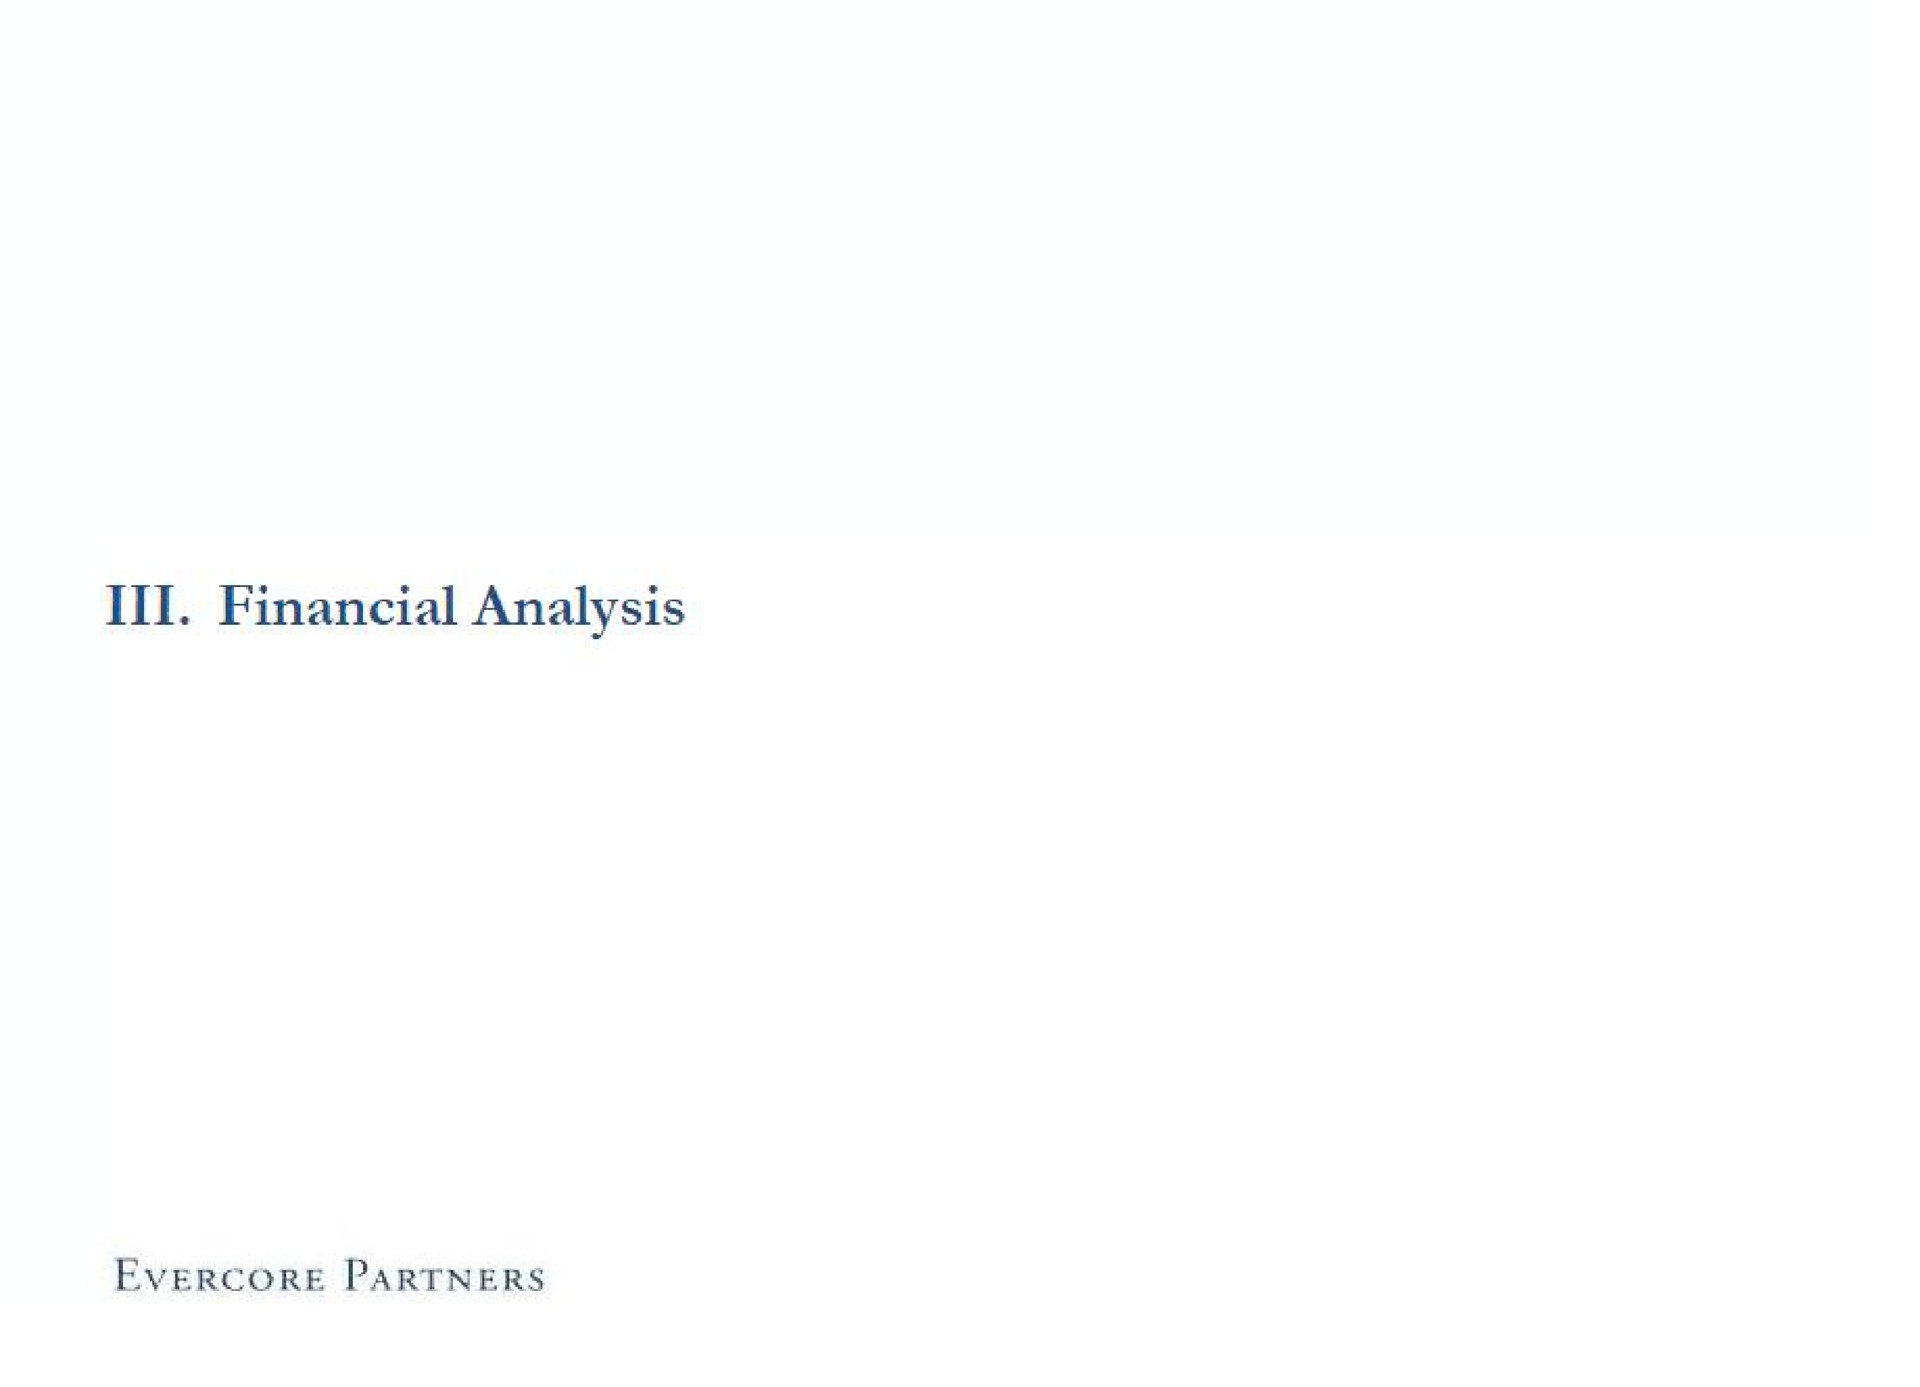 ill financial analysis partners | Evercore